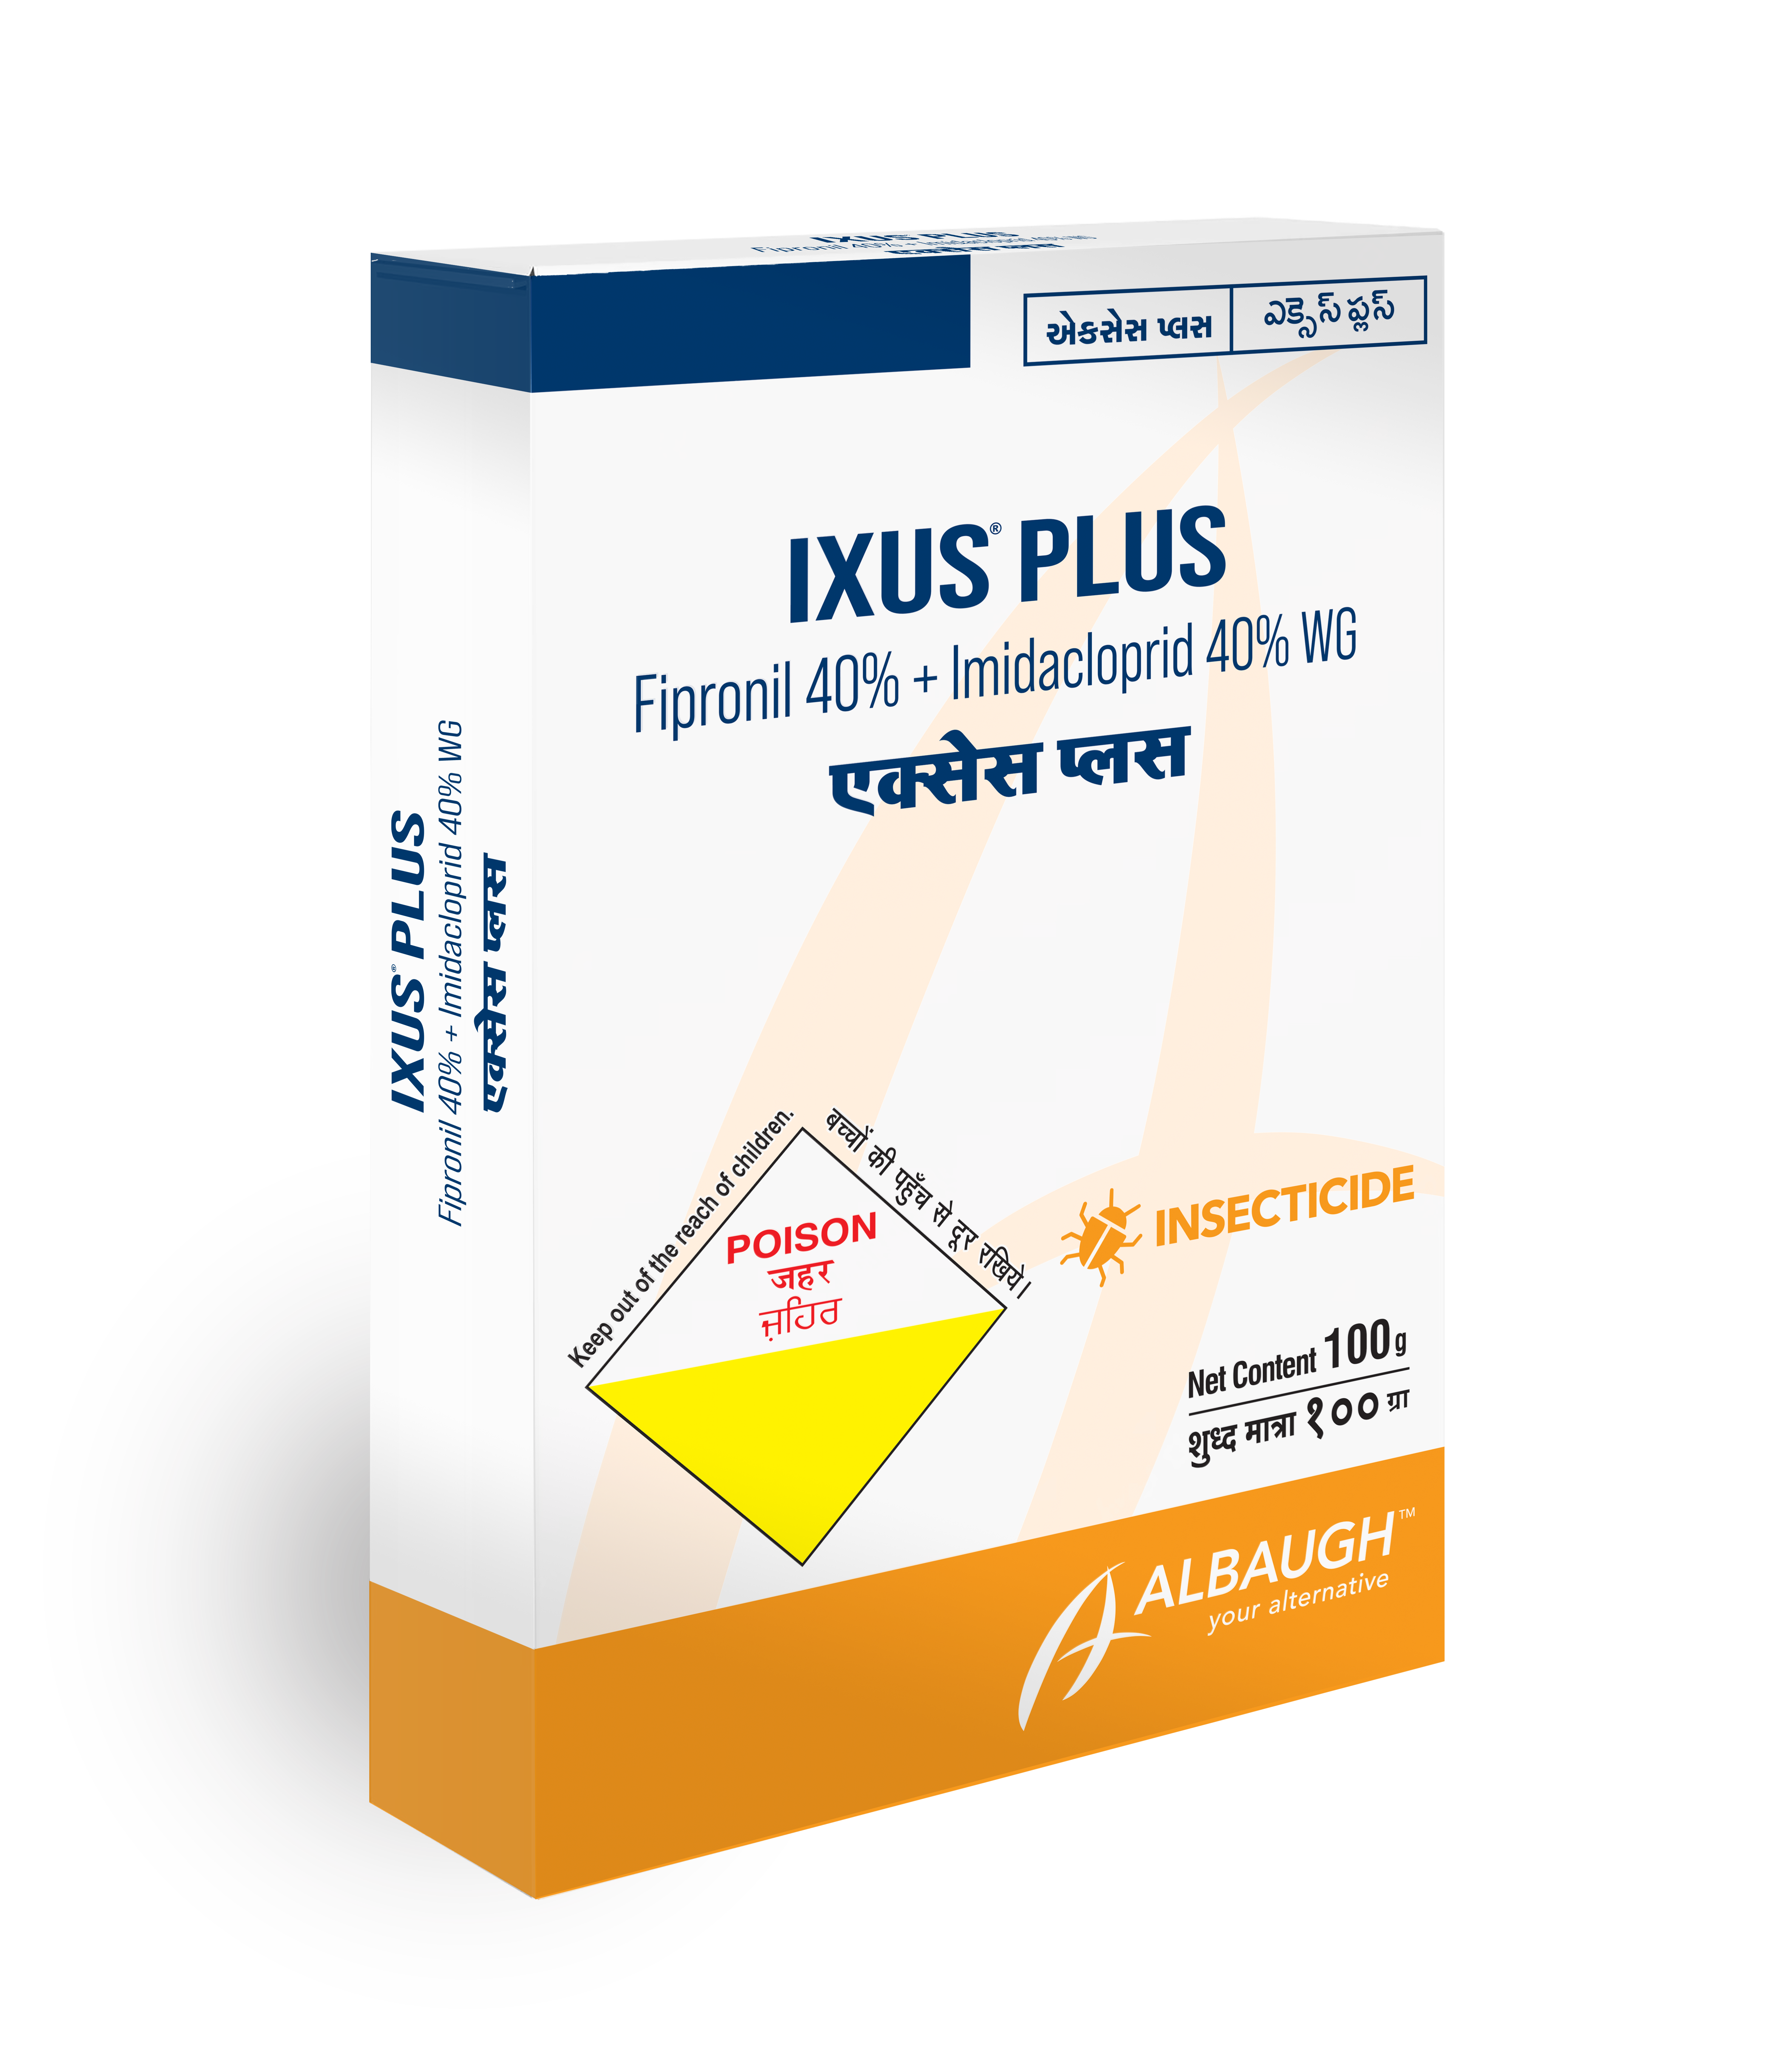 Ixus Plus: Fipronil 40% + Imidacloprid 40% WG